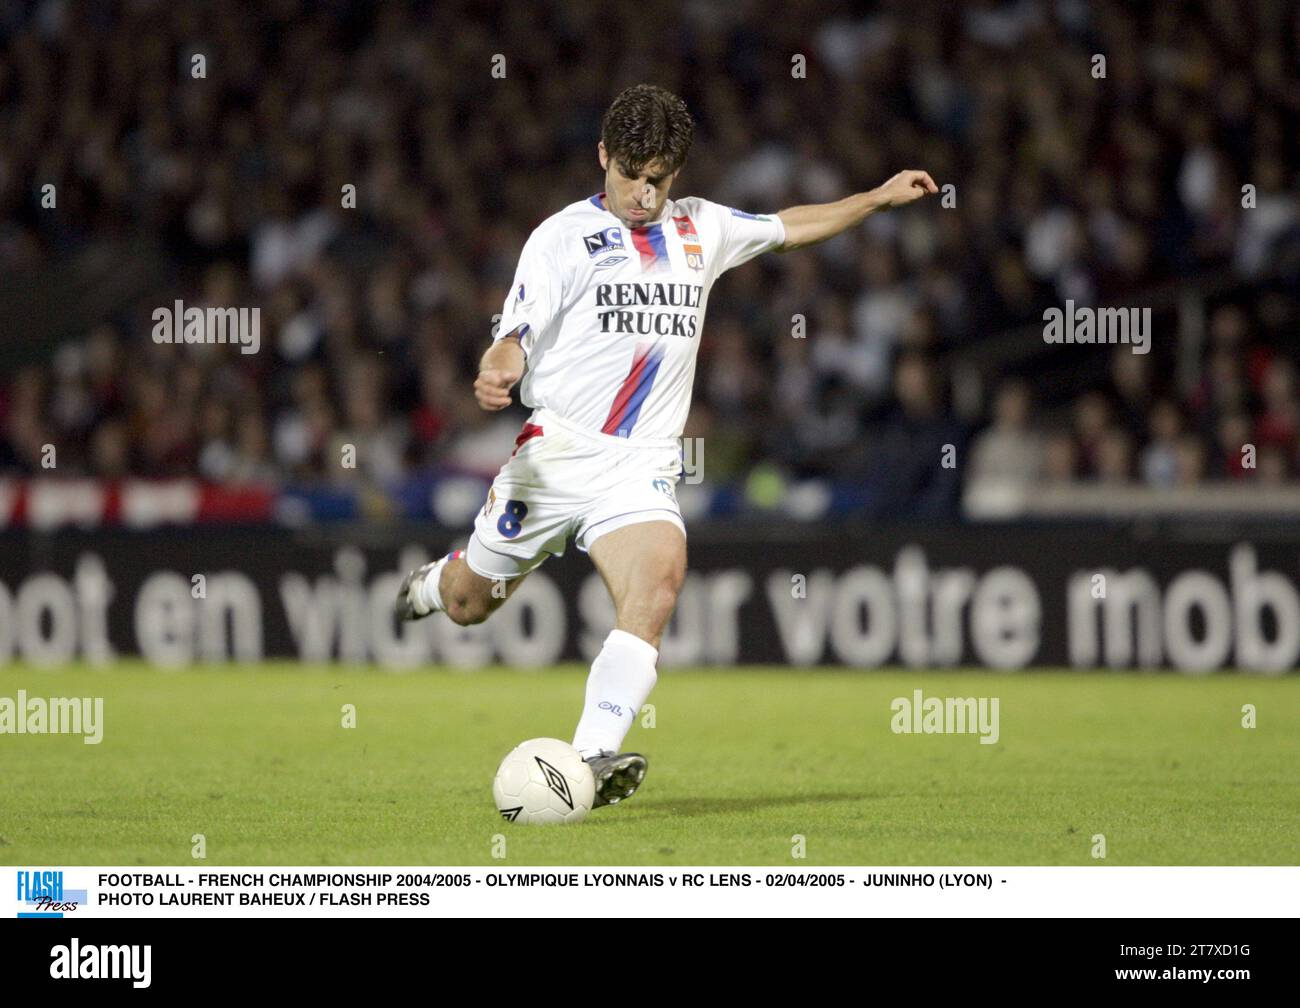 FOOTBALL - FRENCH CHAMPIONSHIP 2004/2005 - OLYMPIQUE LYONNAIS v RC LENS - 02/04/2005 - JUNINHO (LYON) - PHOTO LAURENT BAHEUX / FLASH PRESS Stock Photo